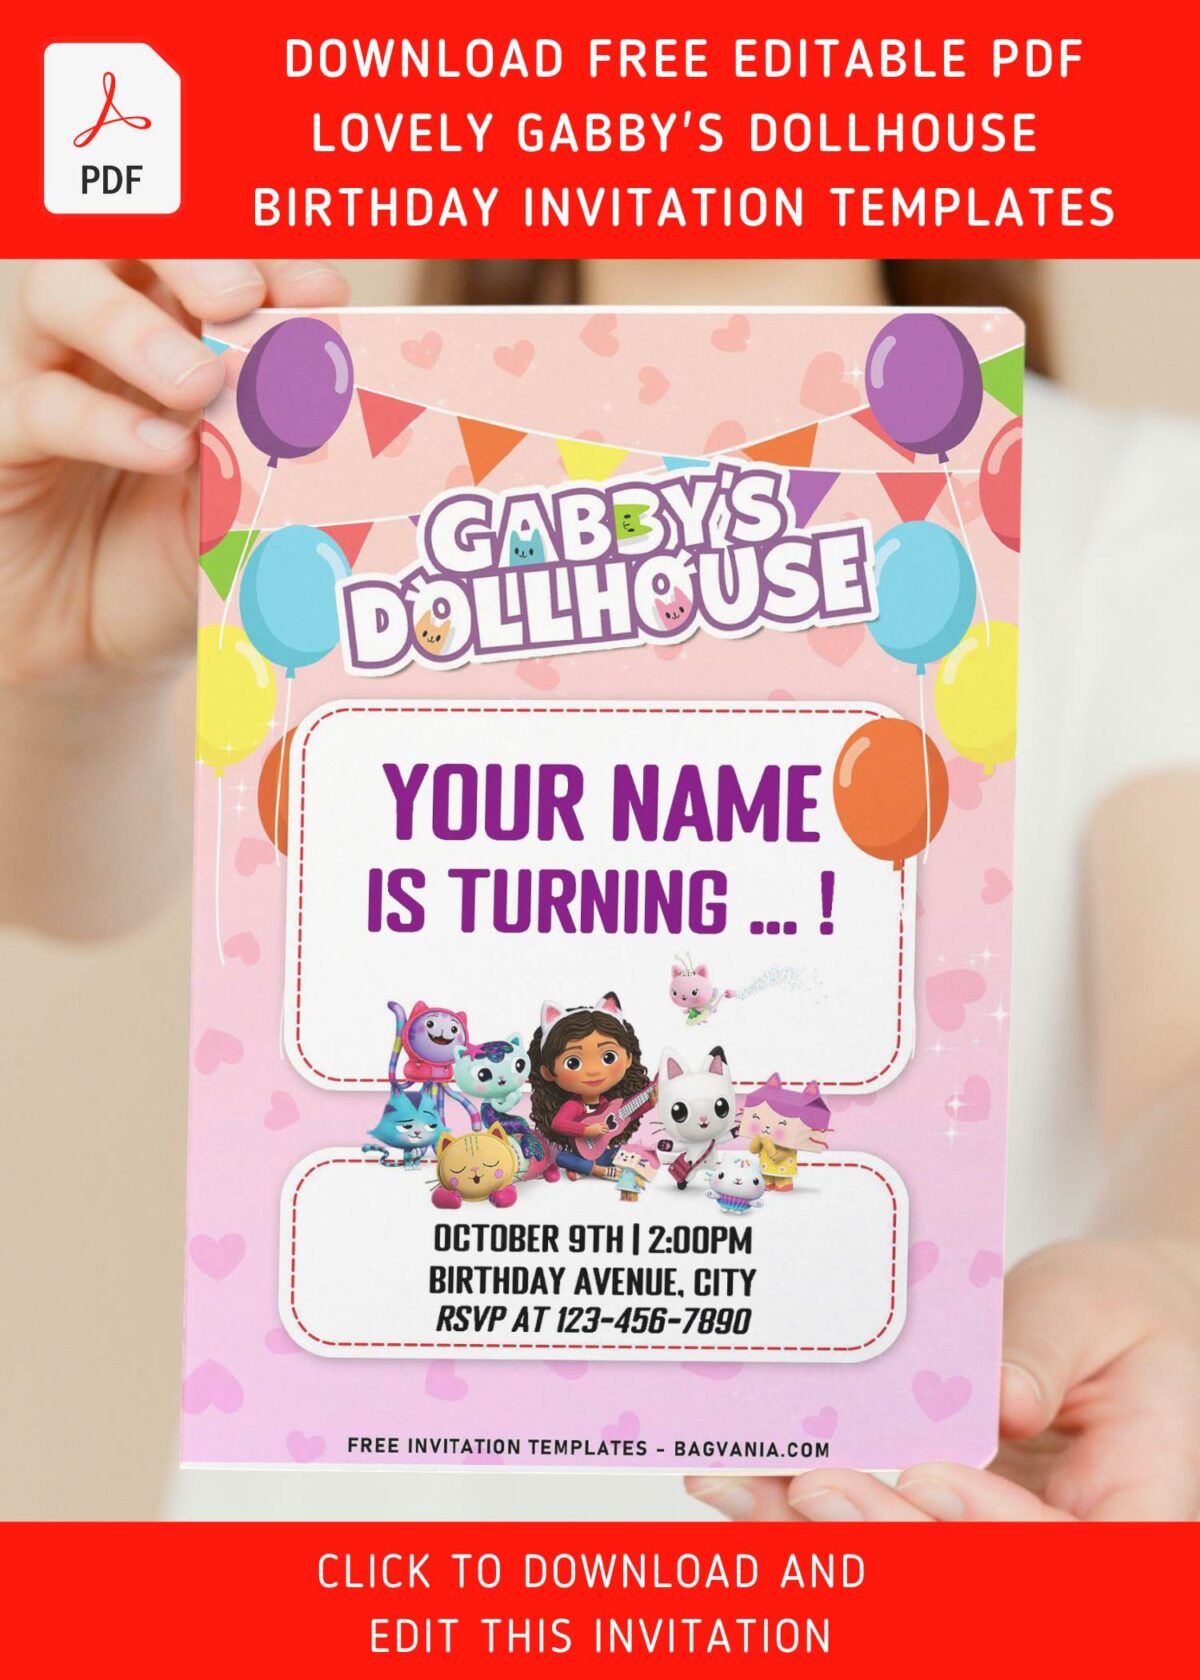 (Free Editable PDF) Purr-fect Gabby's Dollhouse Birthday Invitation Templates with editable text